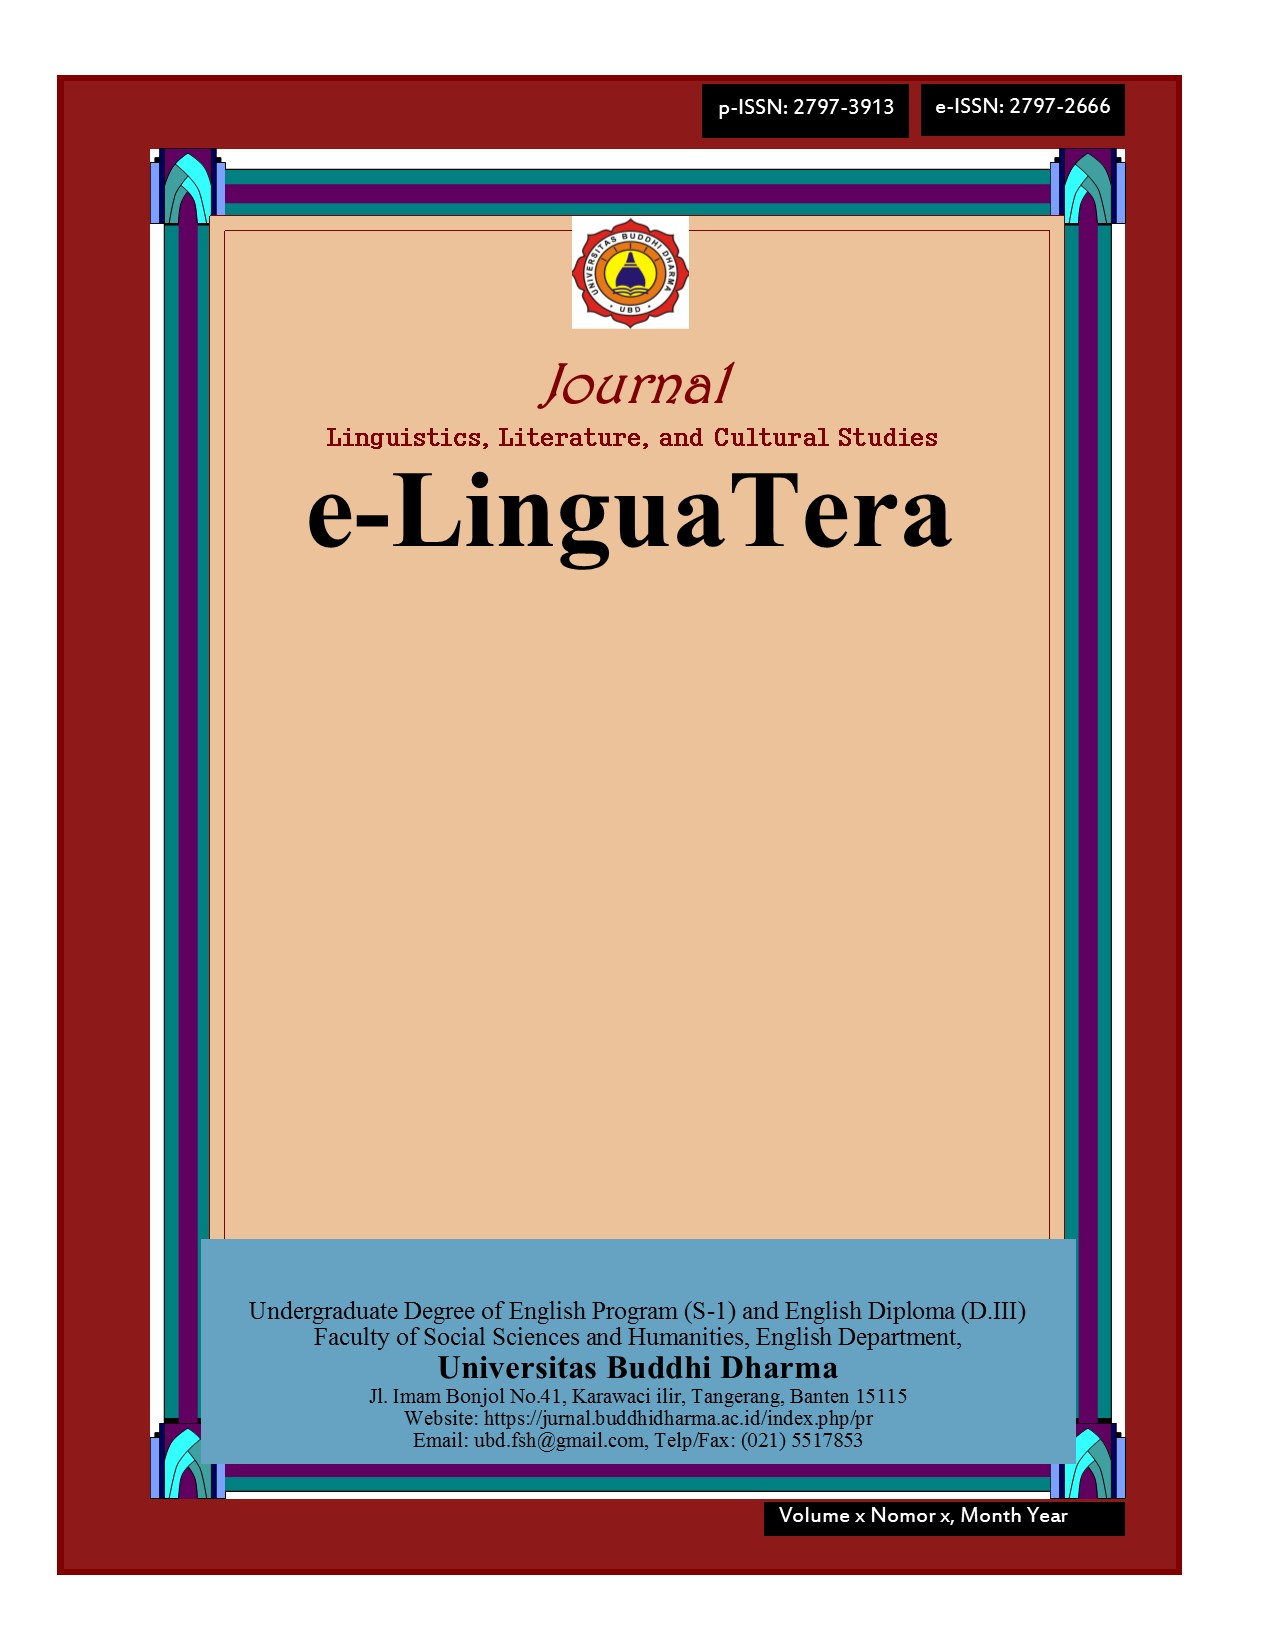 e-LinguaTera: Journal of Linguistics, Literature, and Cultural Studies